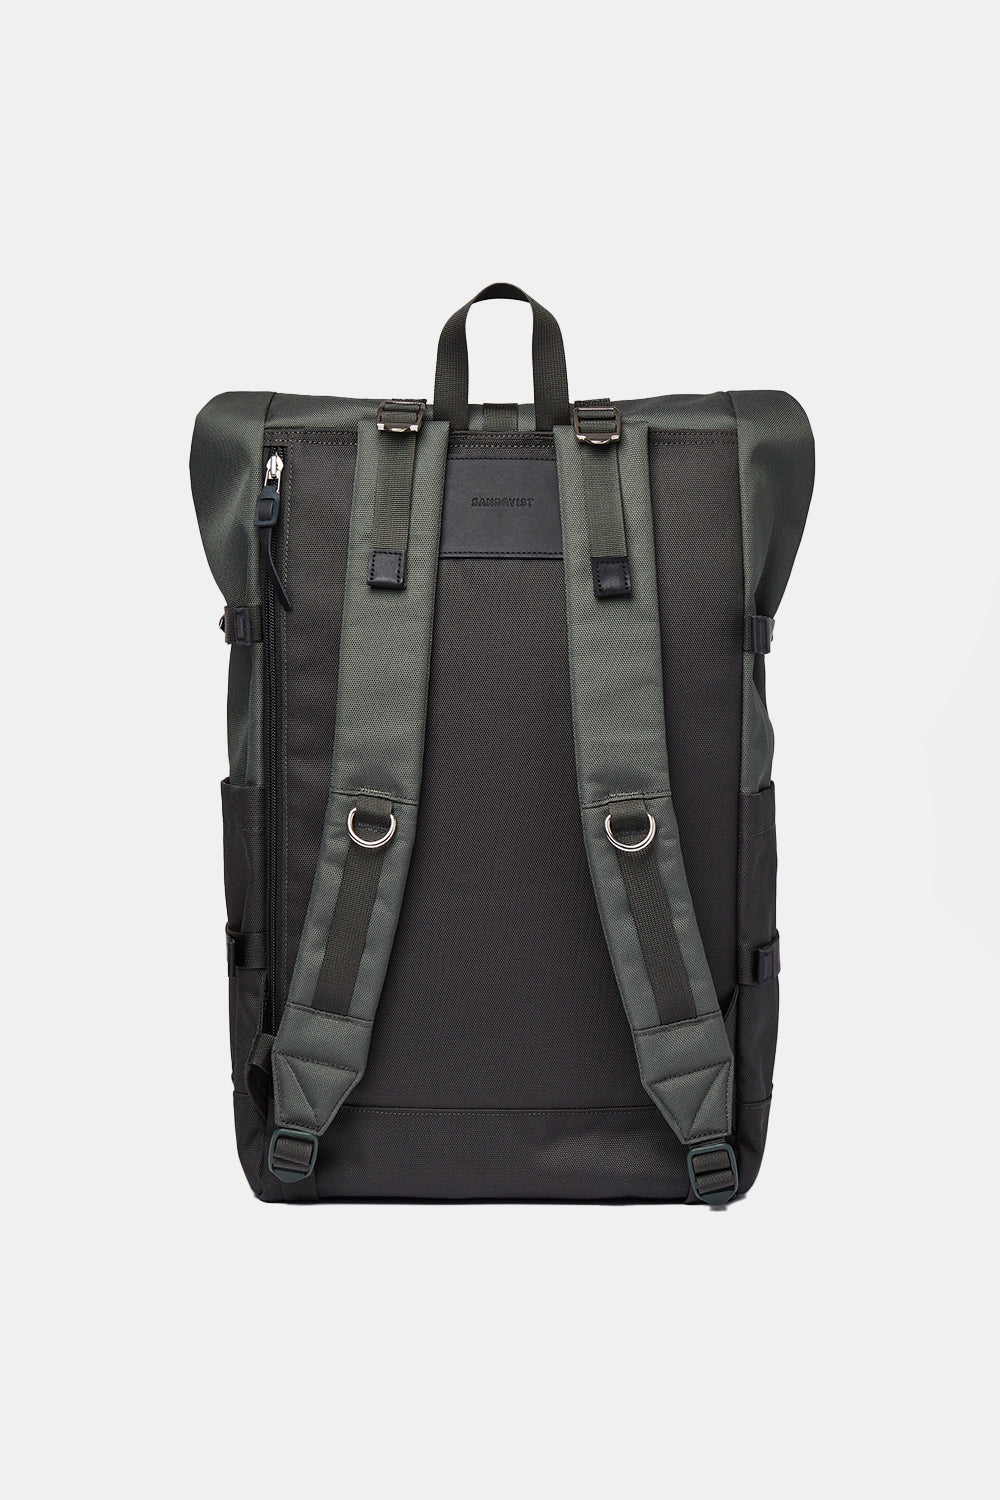 Sandqvist Bernt Backpack (Multi Green / Black)